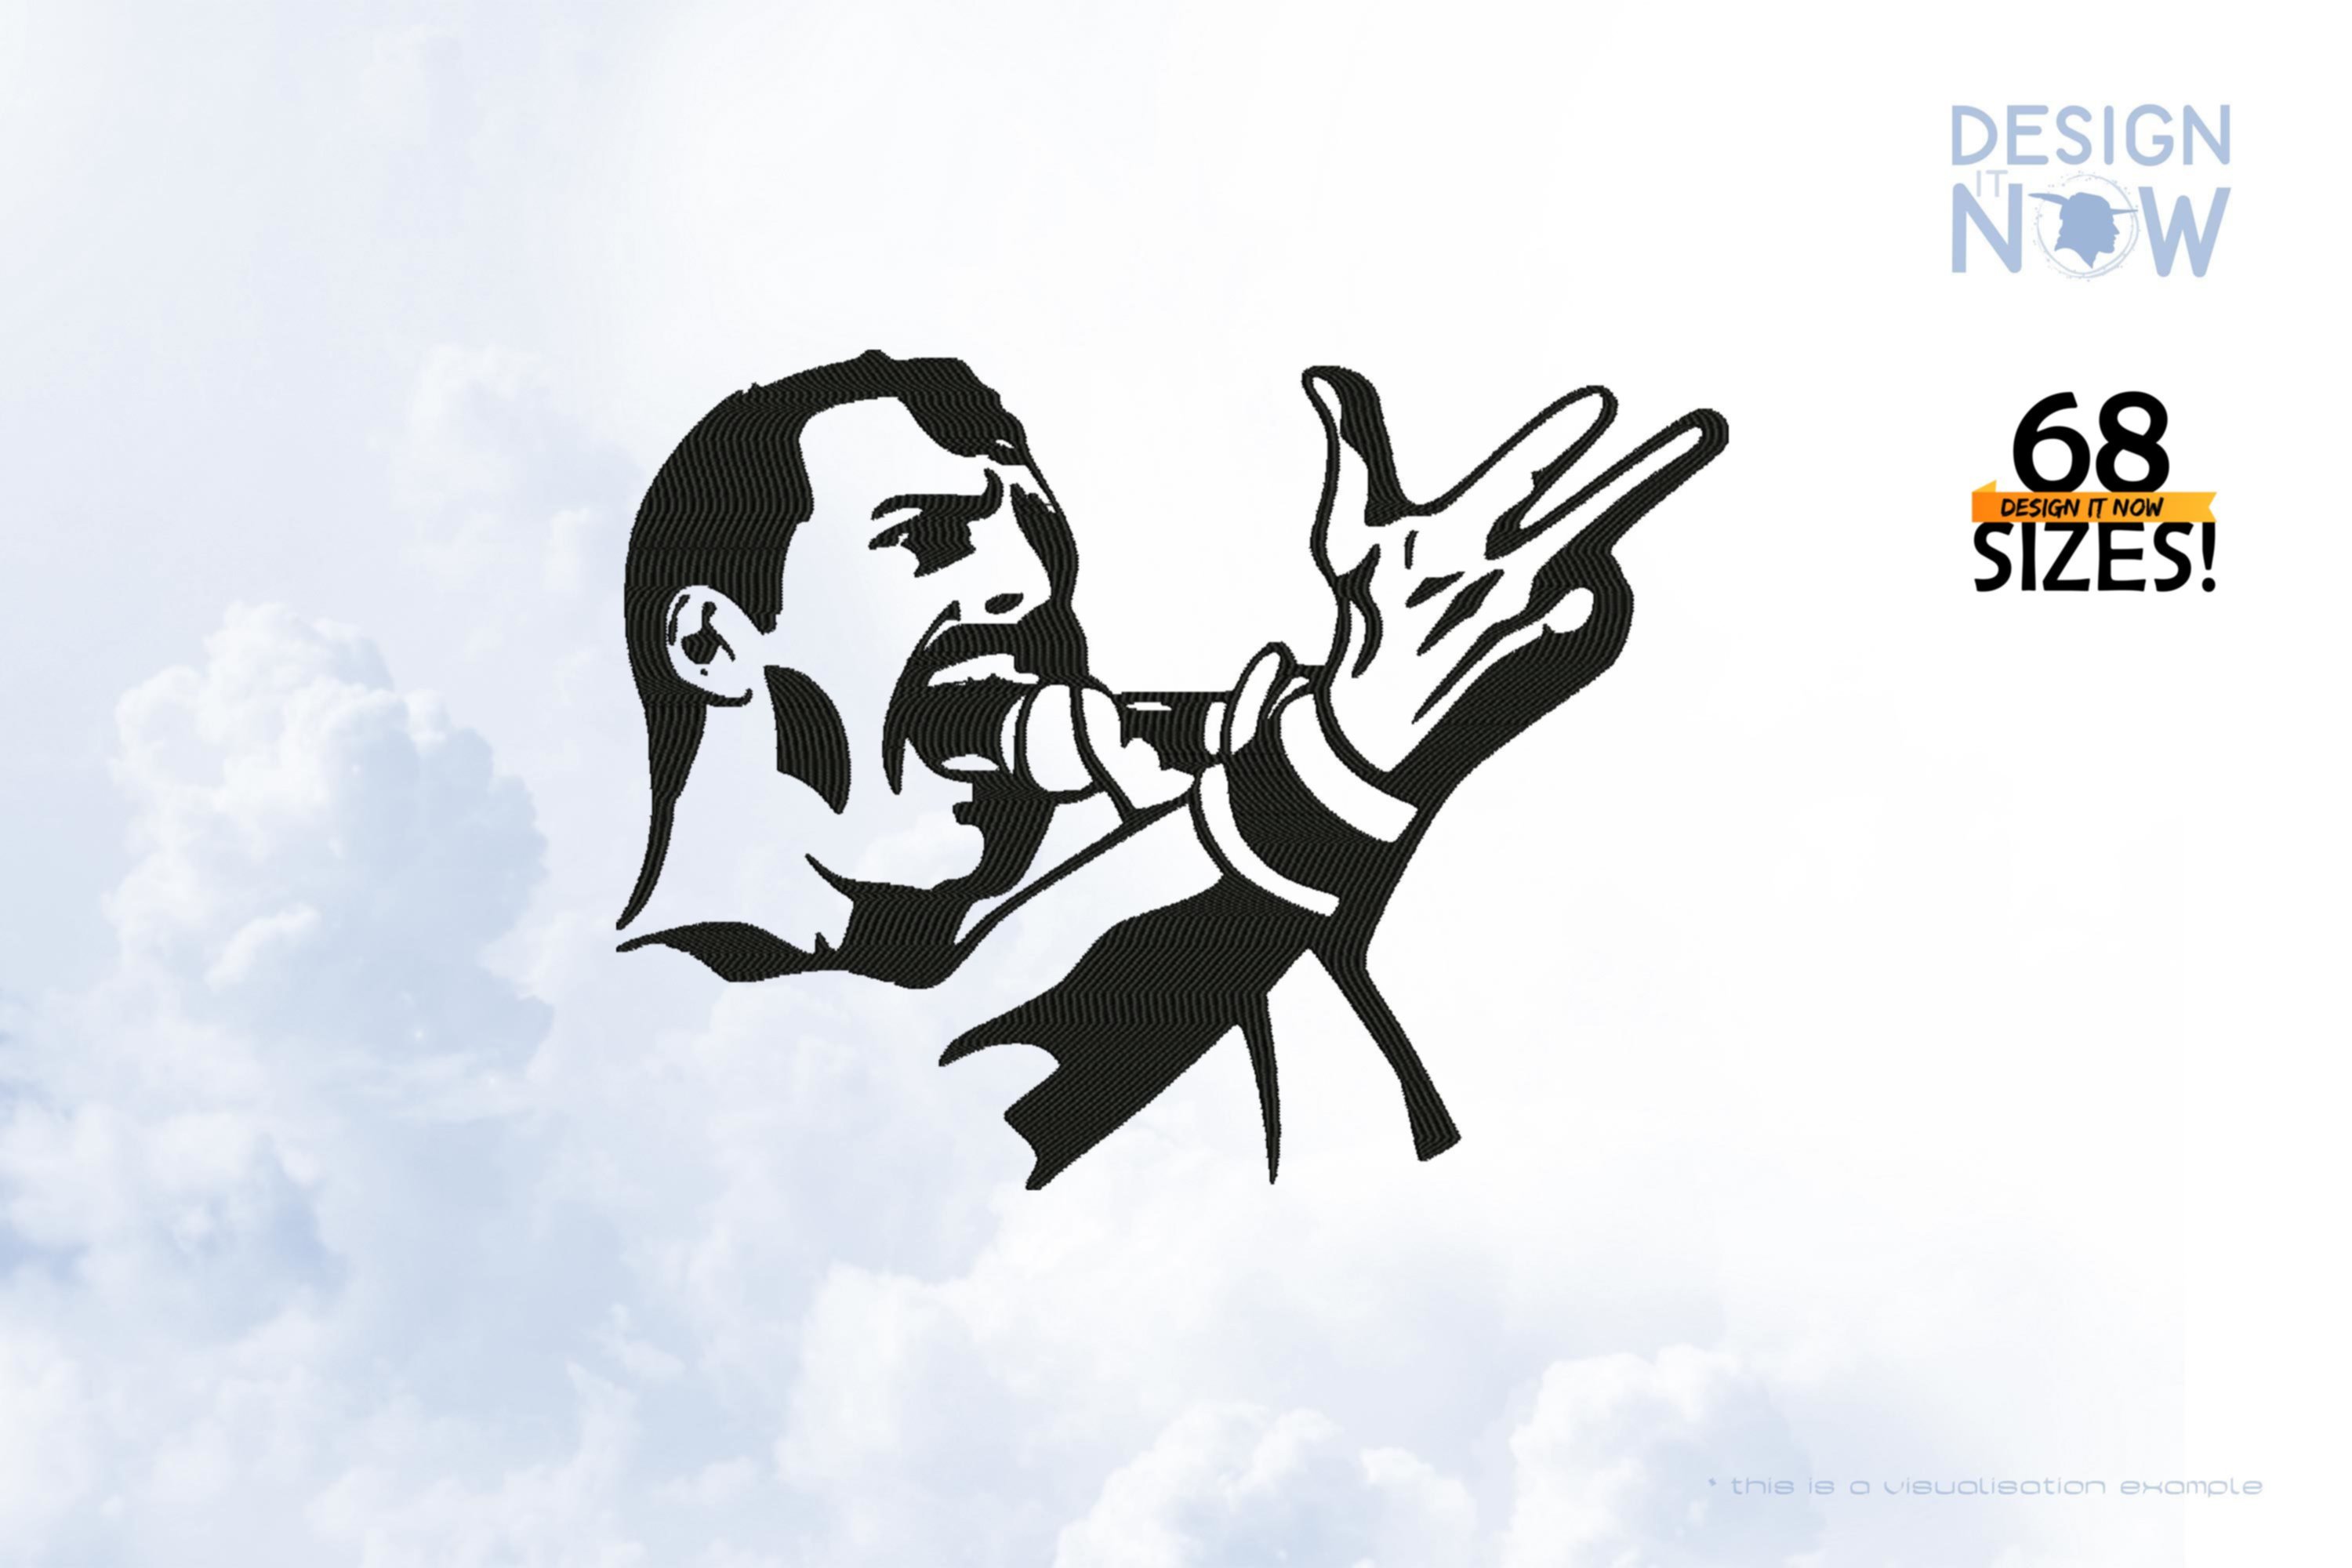 Tribute To Musician Farrokh Bulsara aka Freddie Mercury II